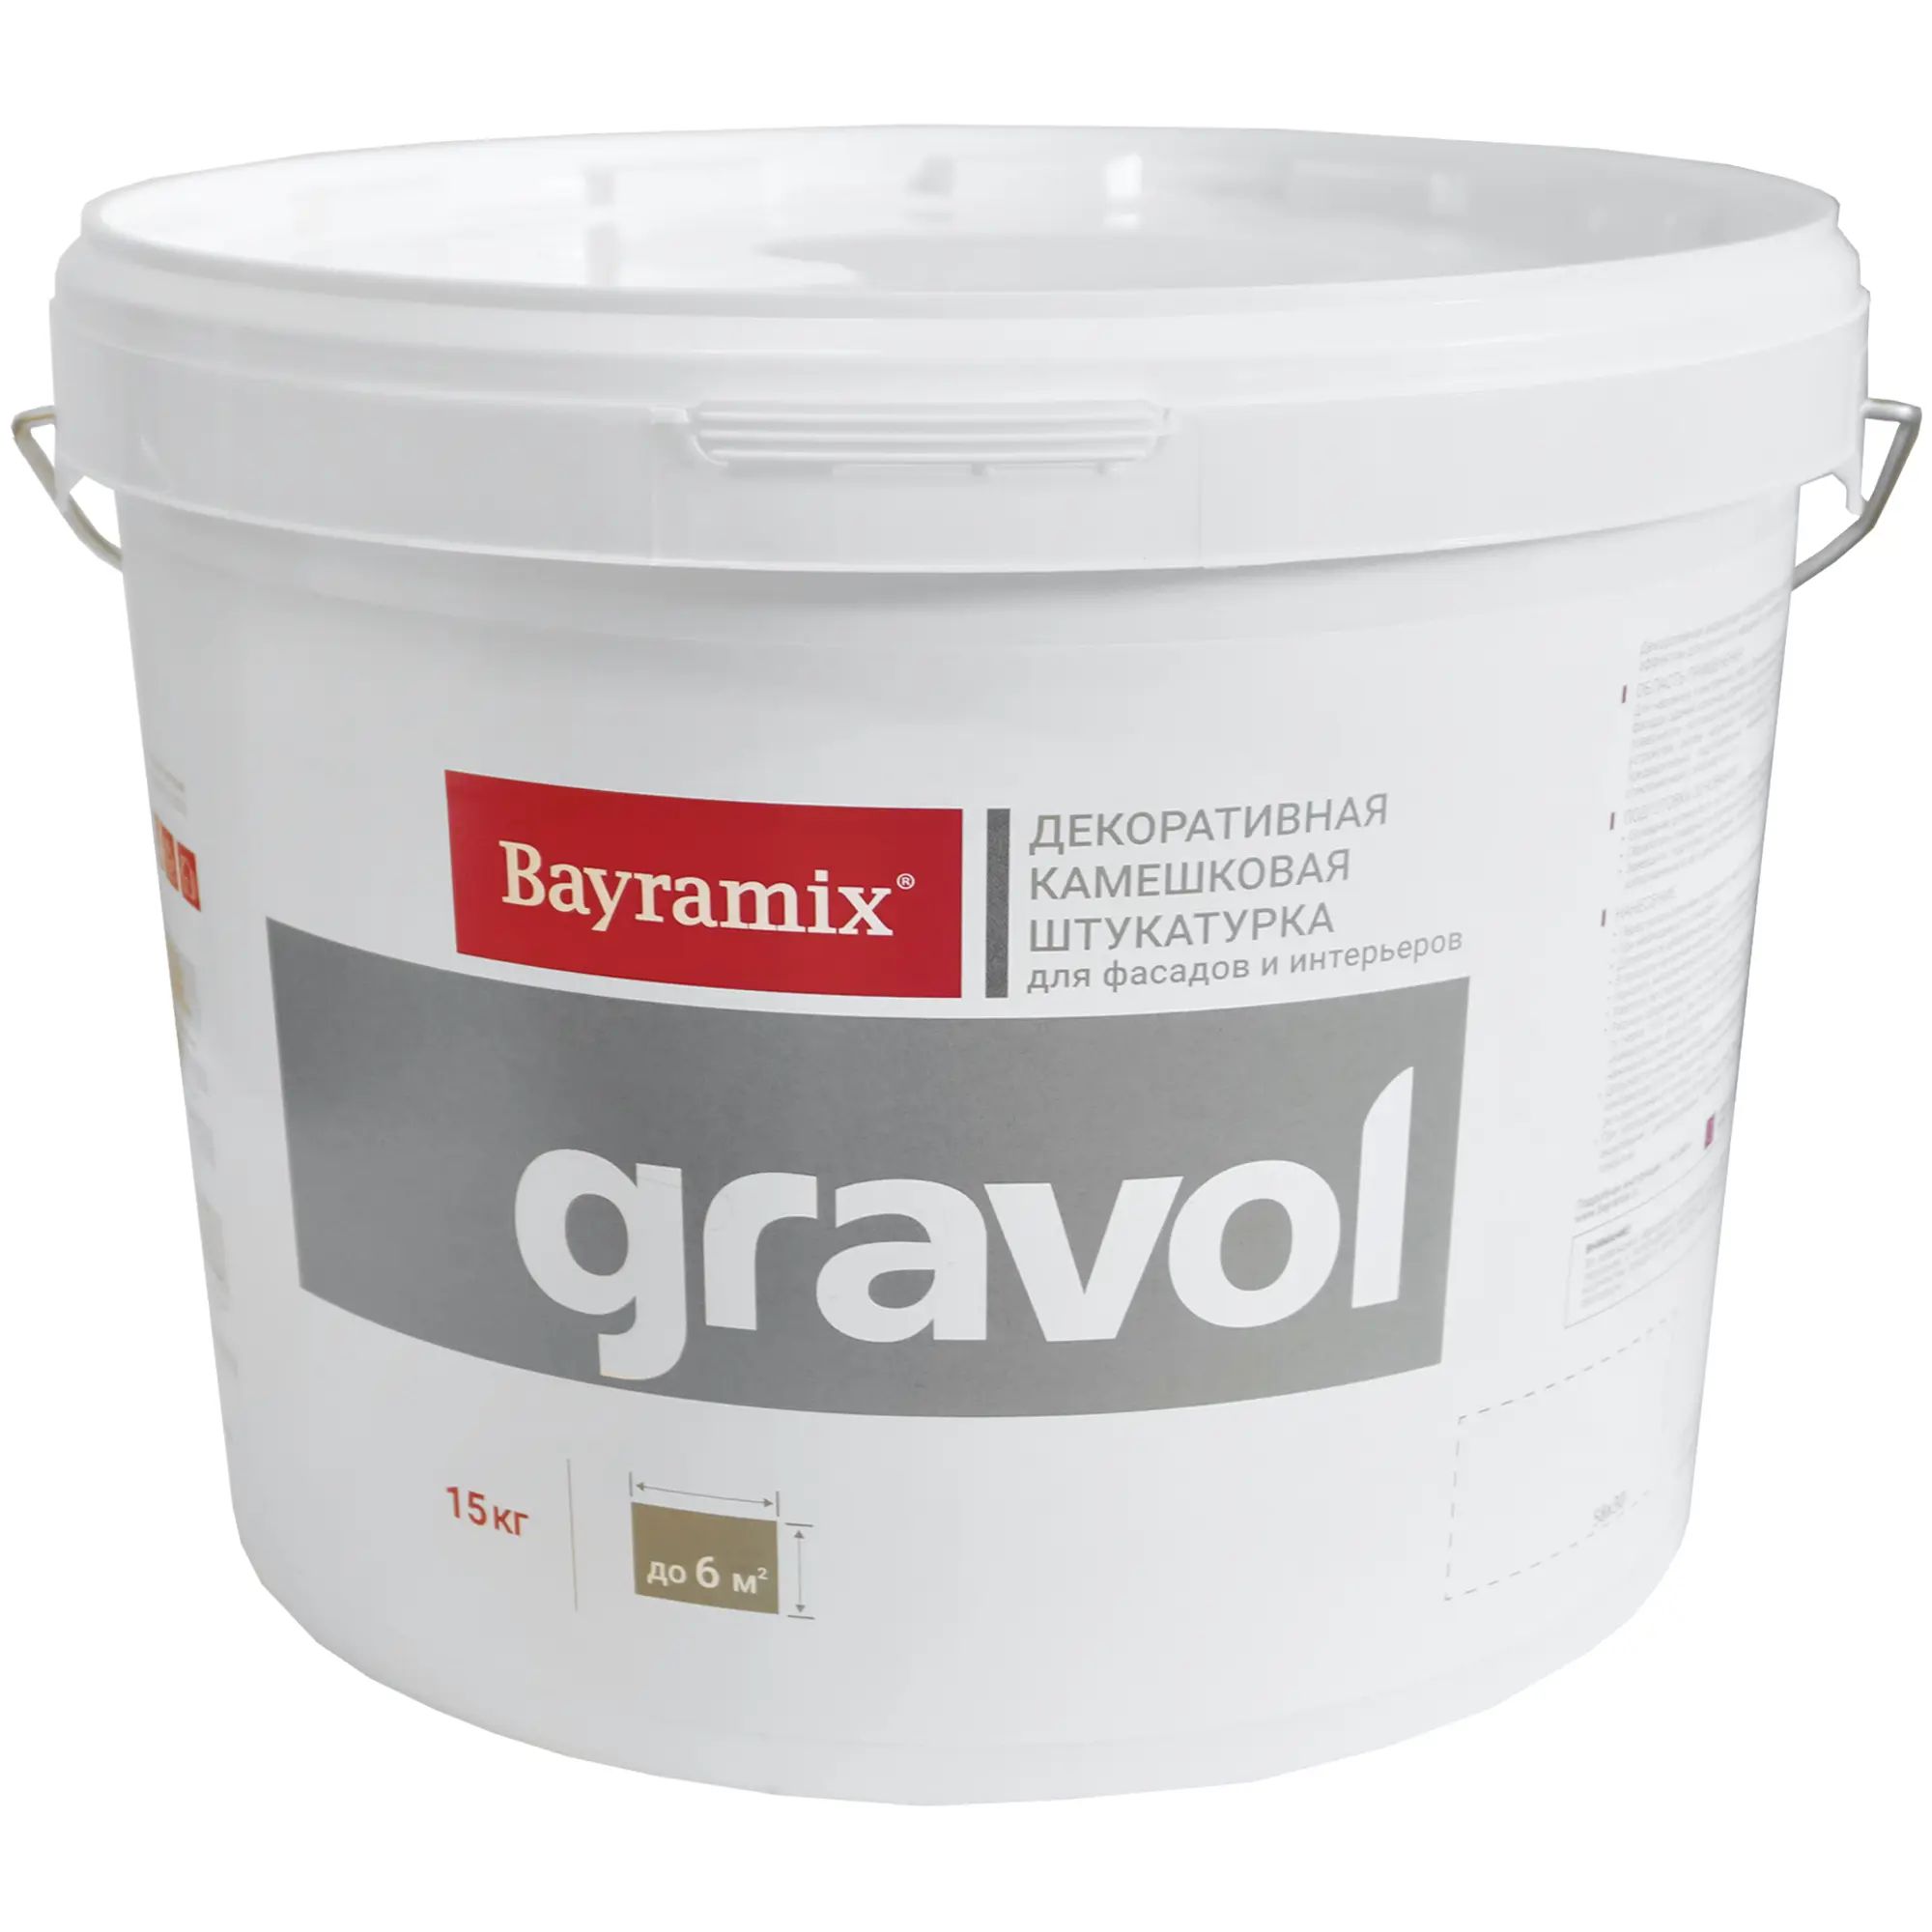 Штукатурка Bayramix Gravol 001, декоративная 2,5 мм, 15 кг